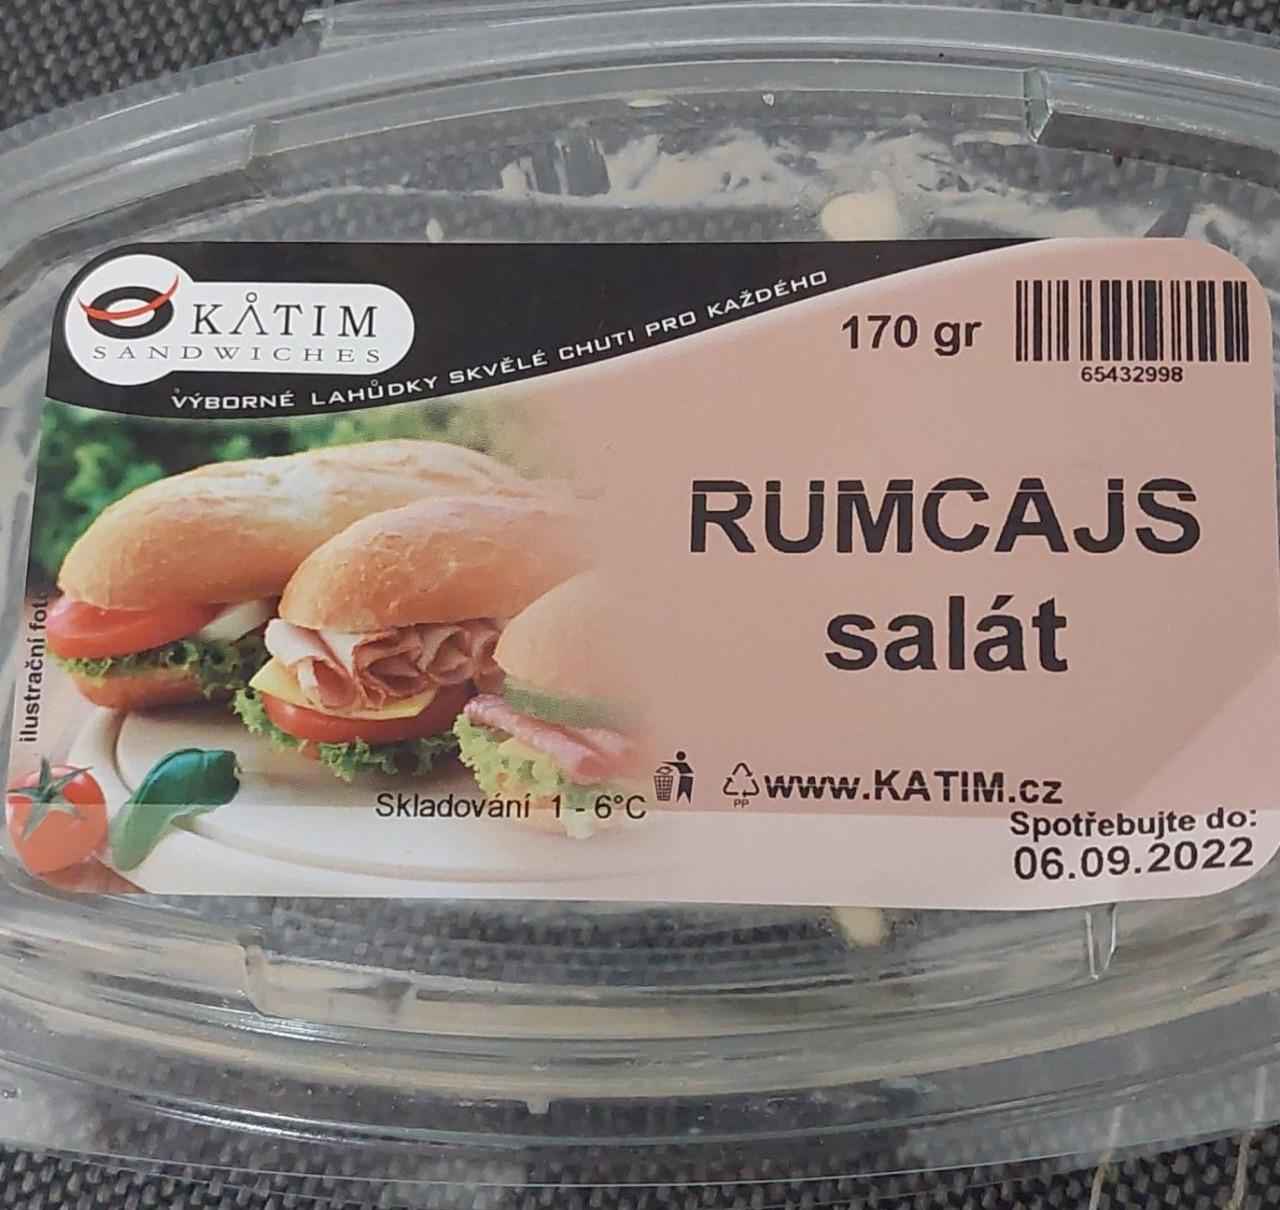 Fotografie - Rumcajs salát Katim Sandwiches